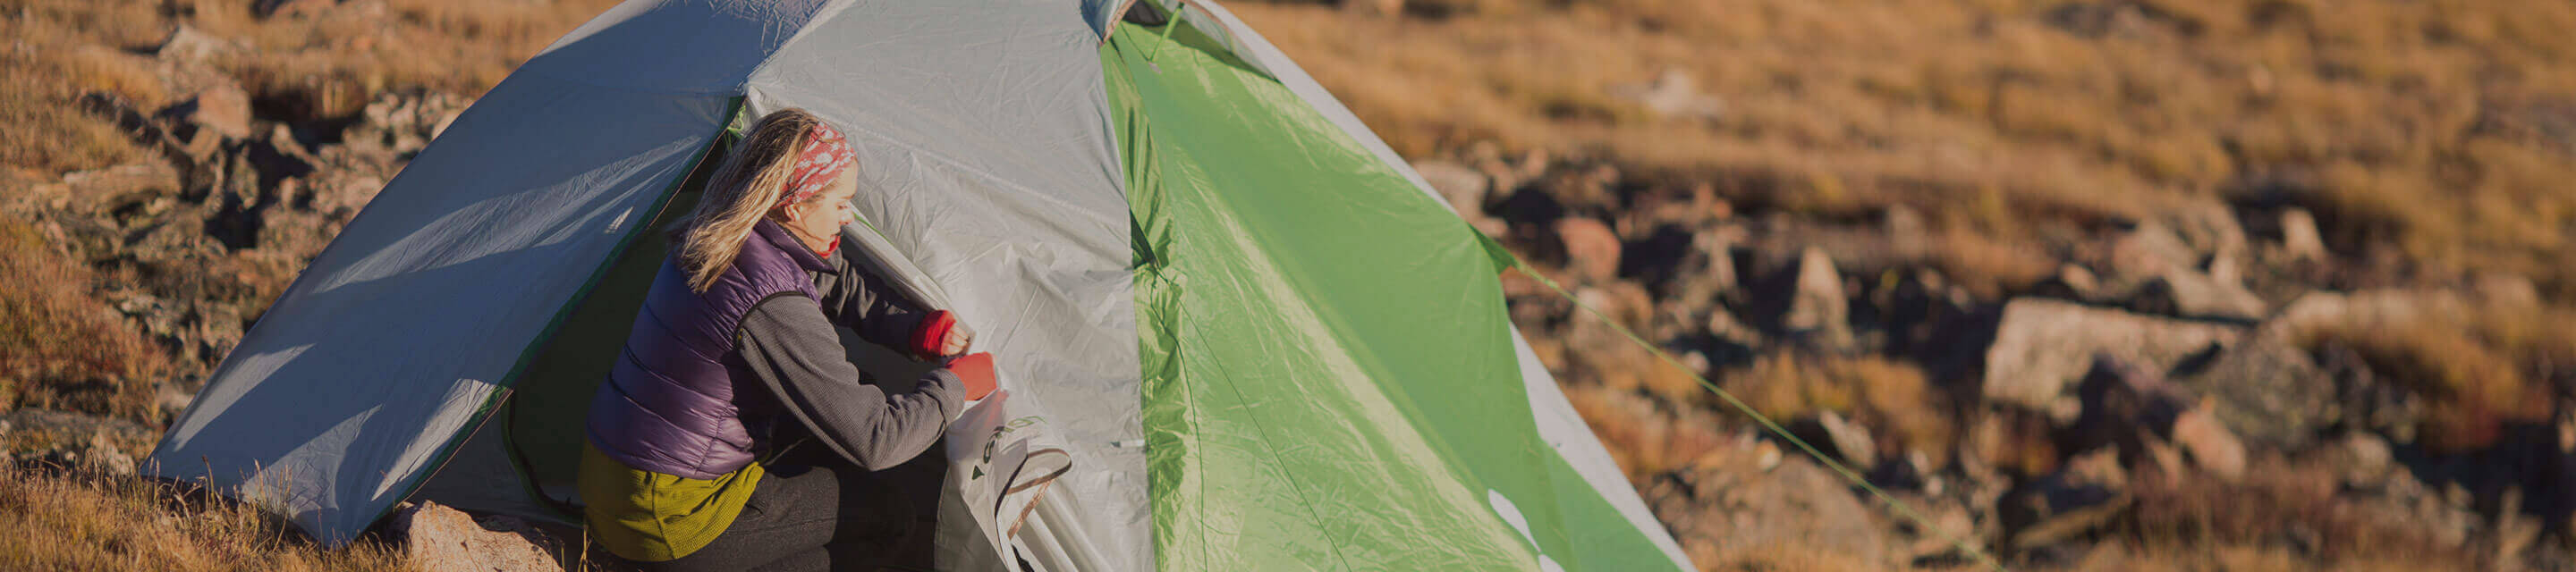 erosie Onbemand Controverse Tent Outlet - Eureka!